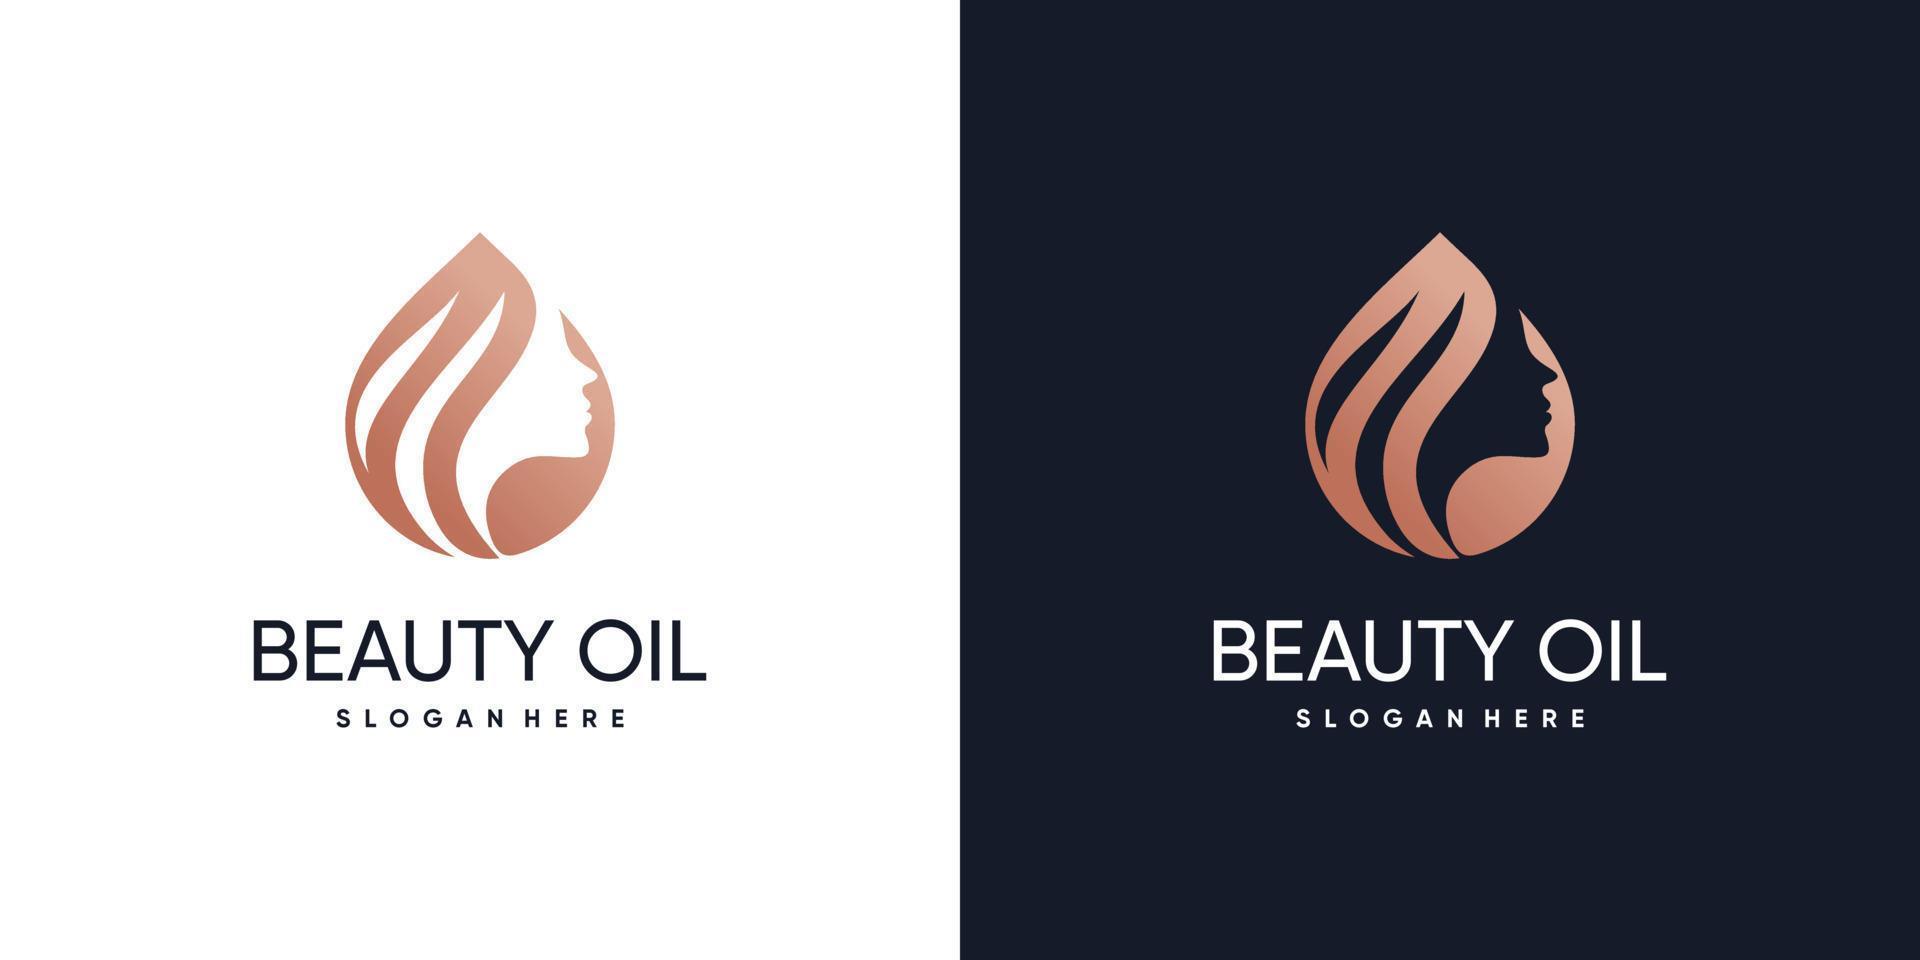 Oil beauty logo design vector with woman face concept